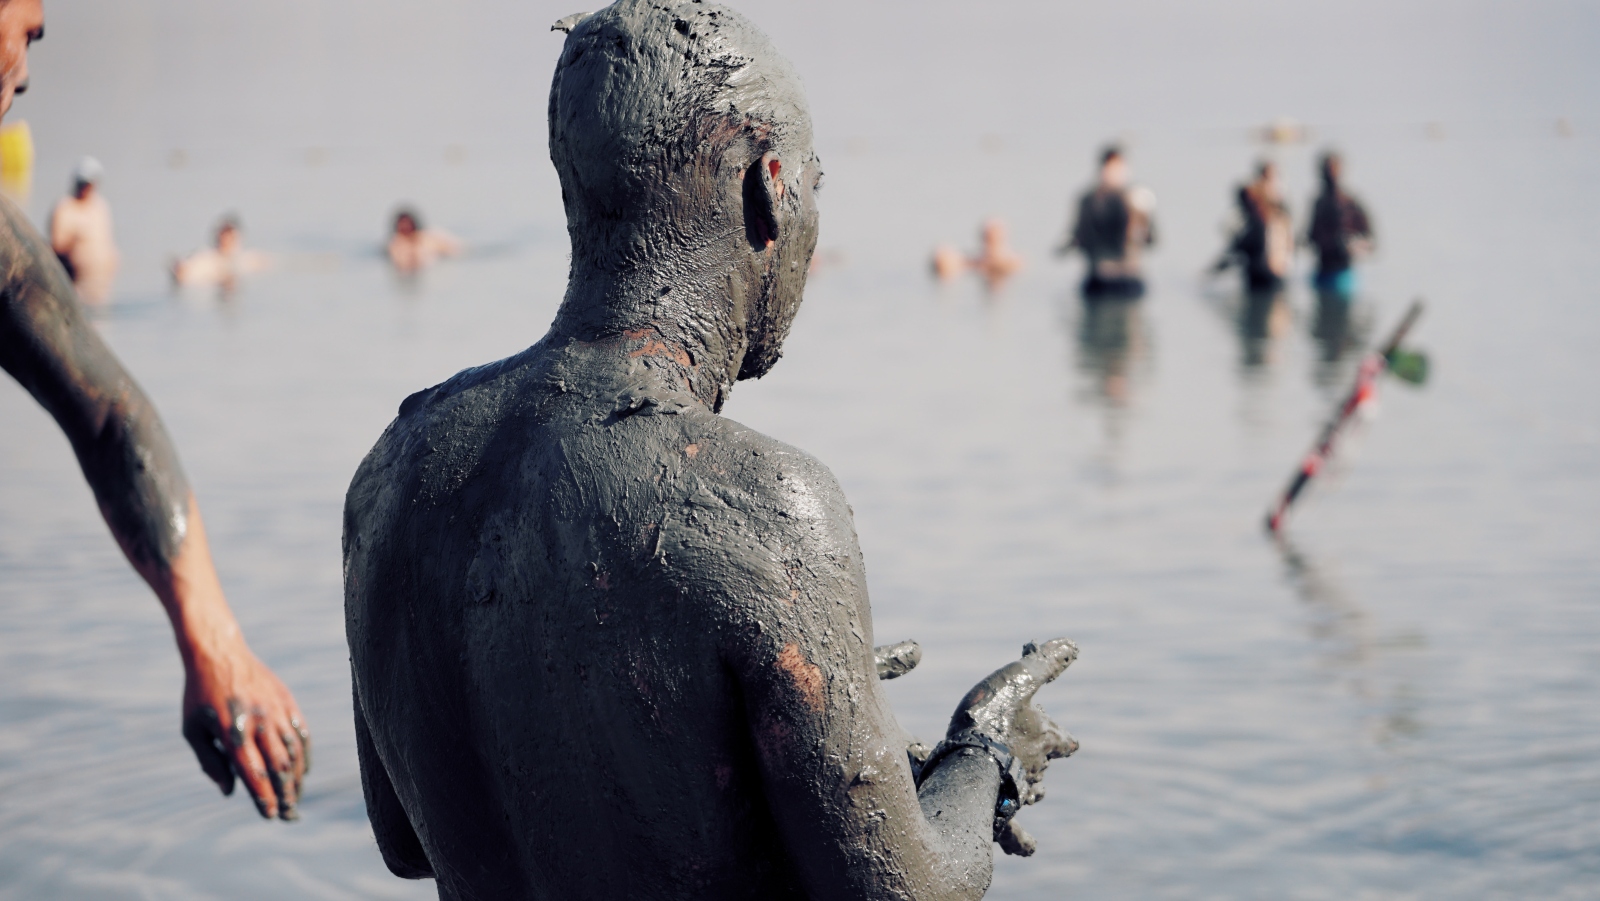 Photo of a Dead Sea bather by Drew Gilliam on Unsplash